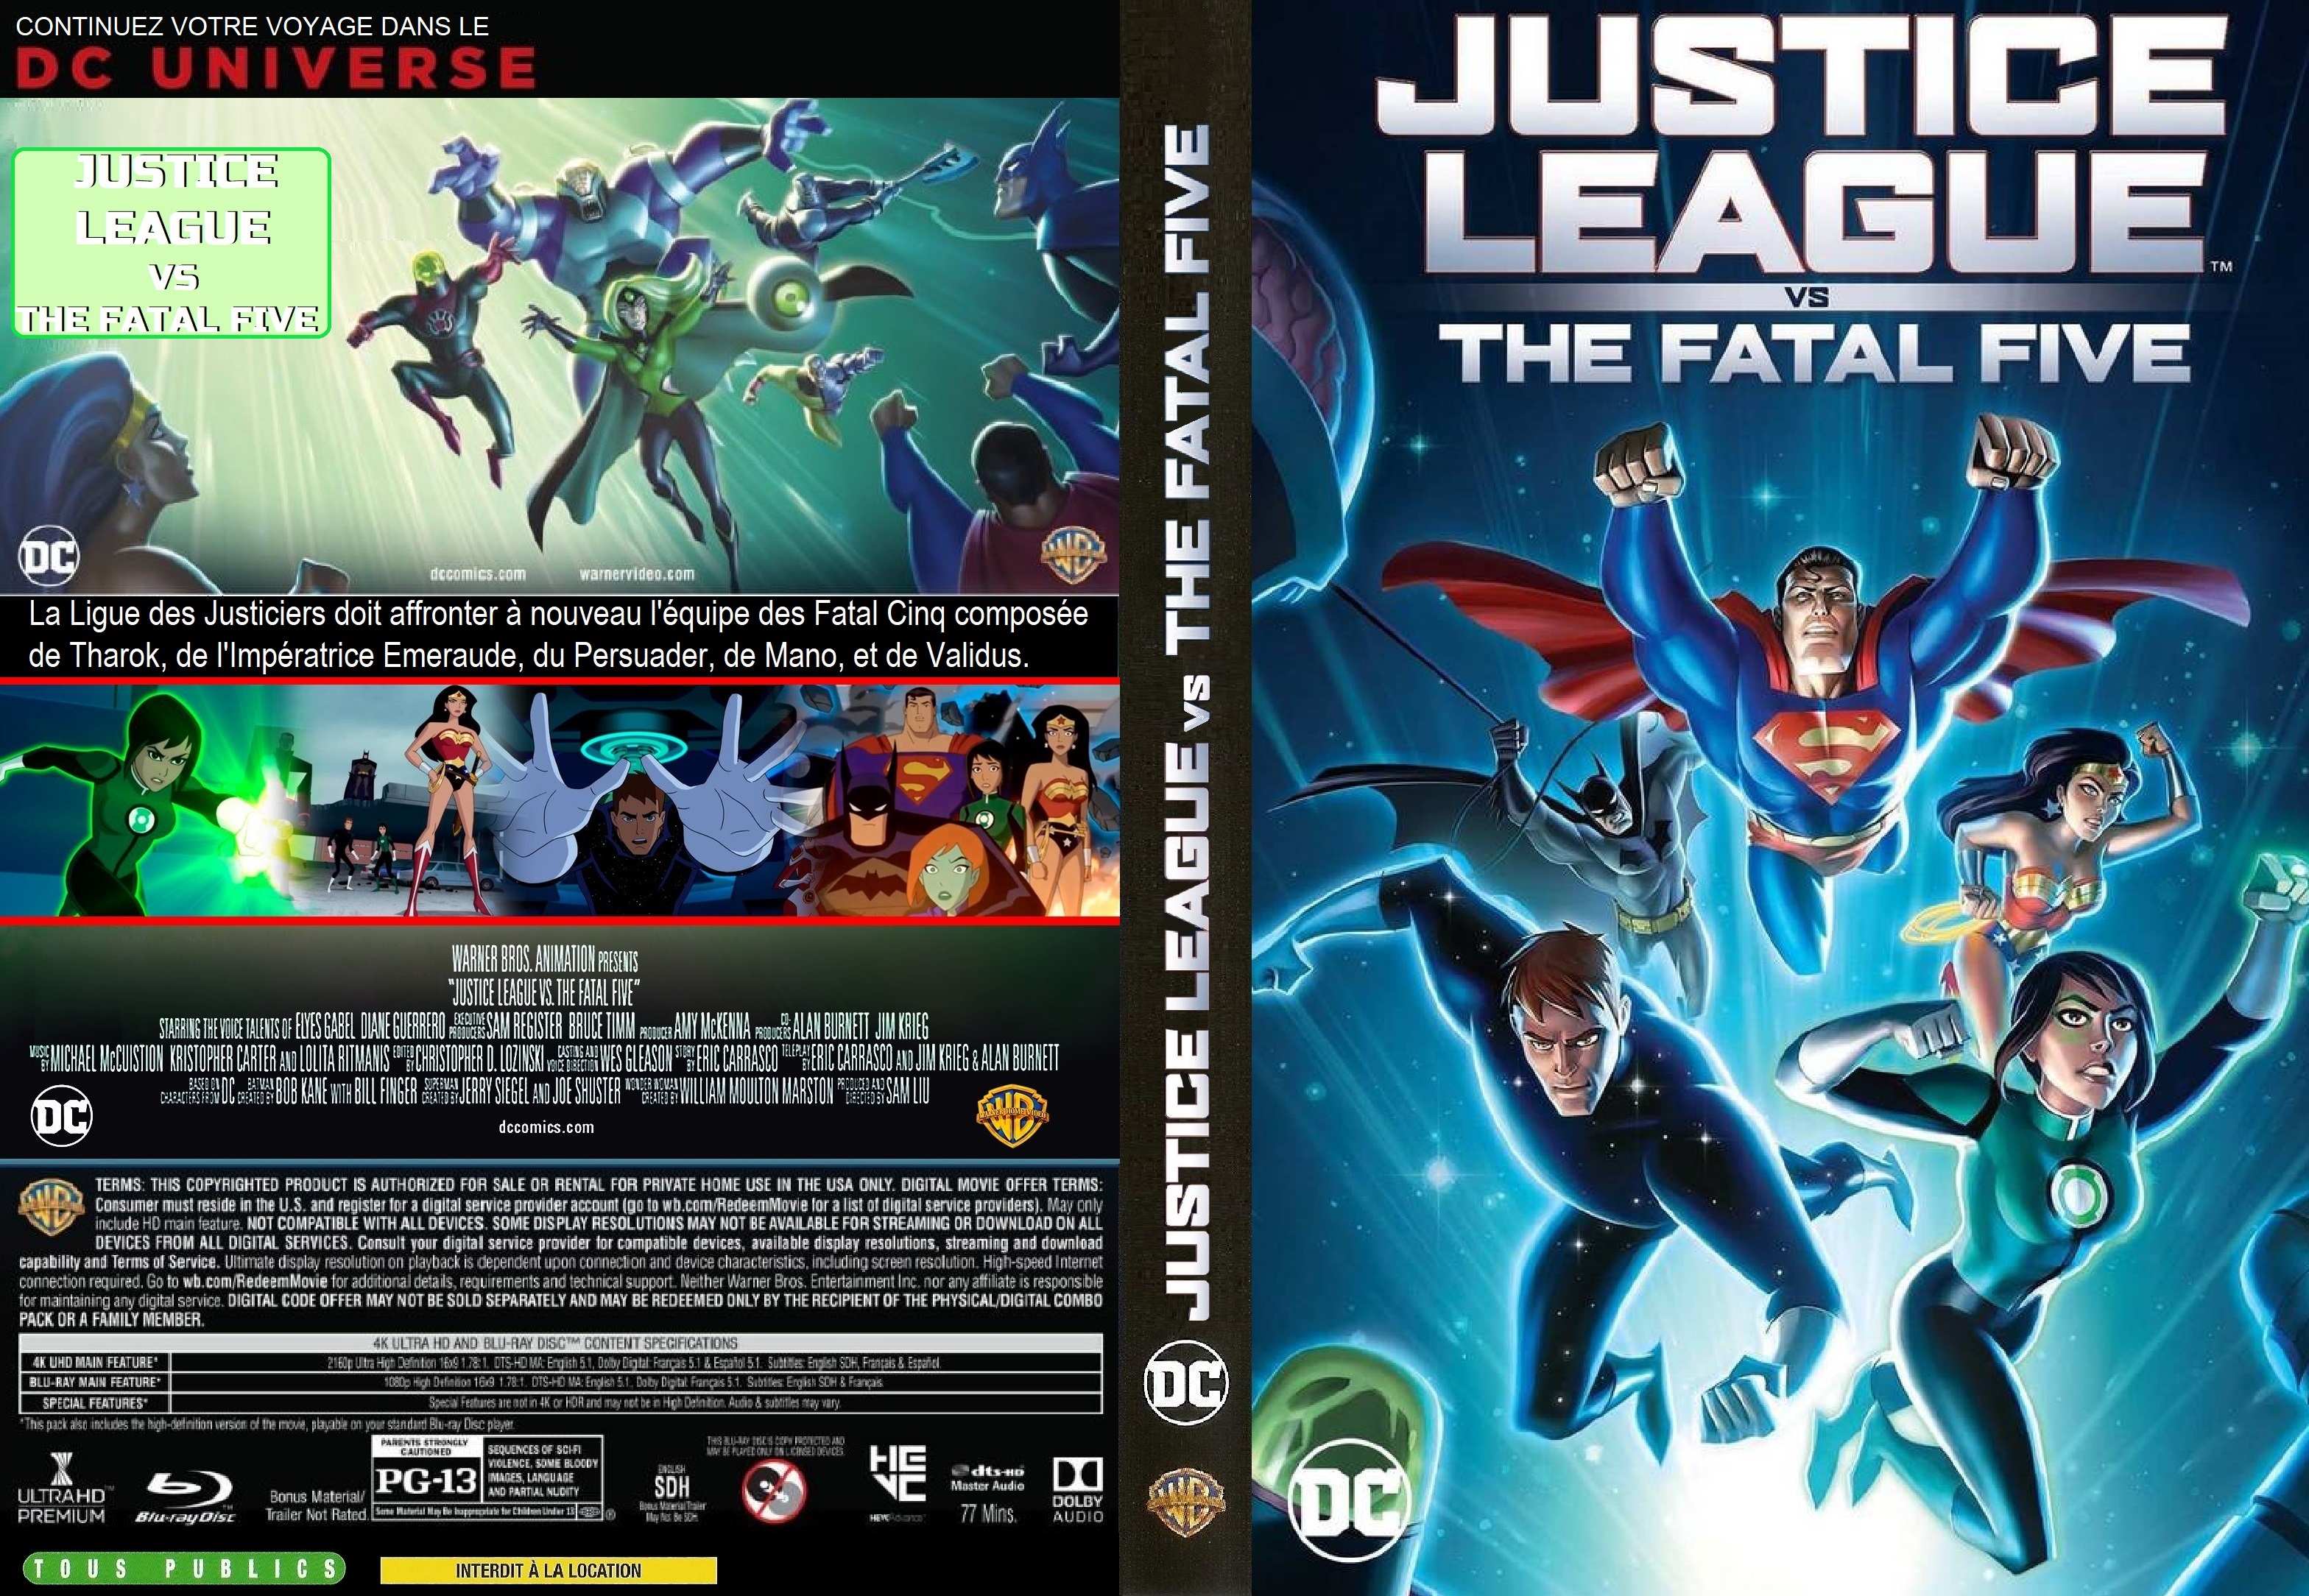 Jaquette DVD Justice League VS The Fatal Five custom